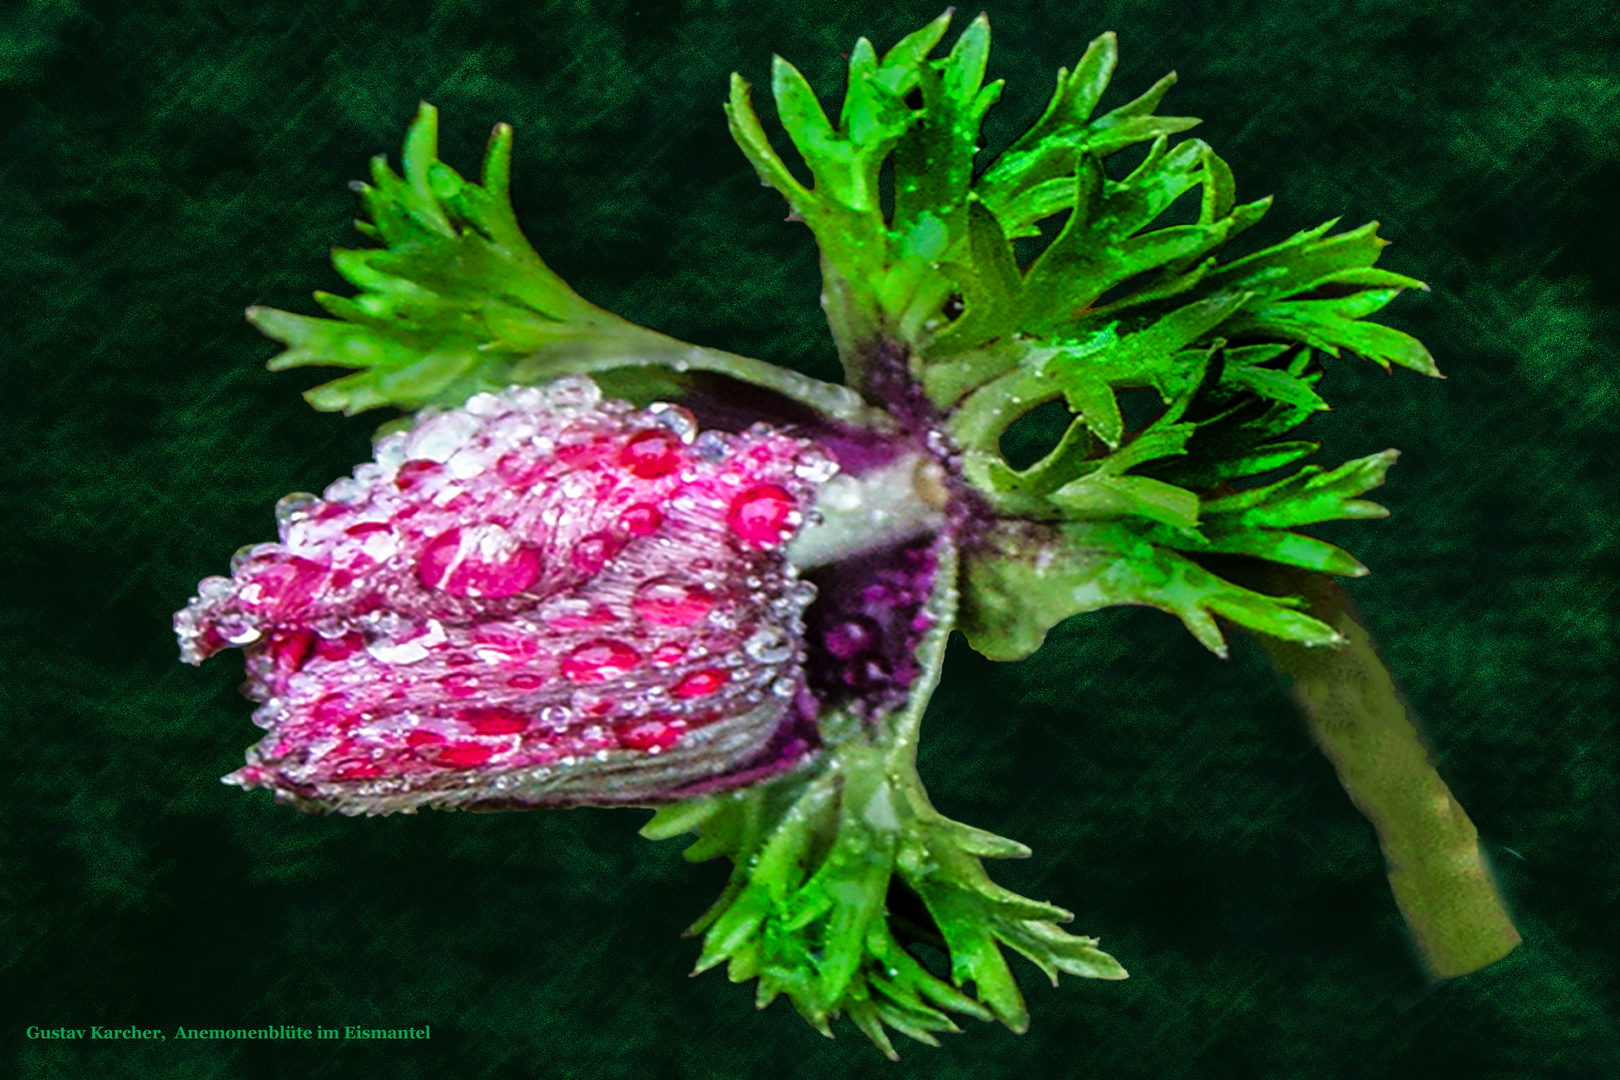  Anemonenblütenknospe im Eismantel